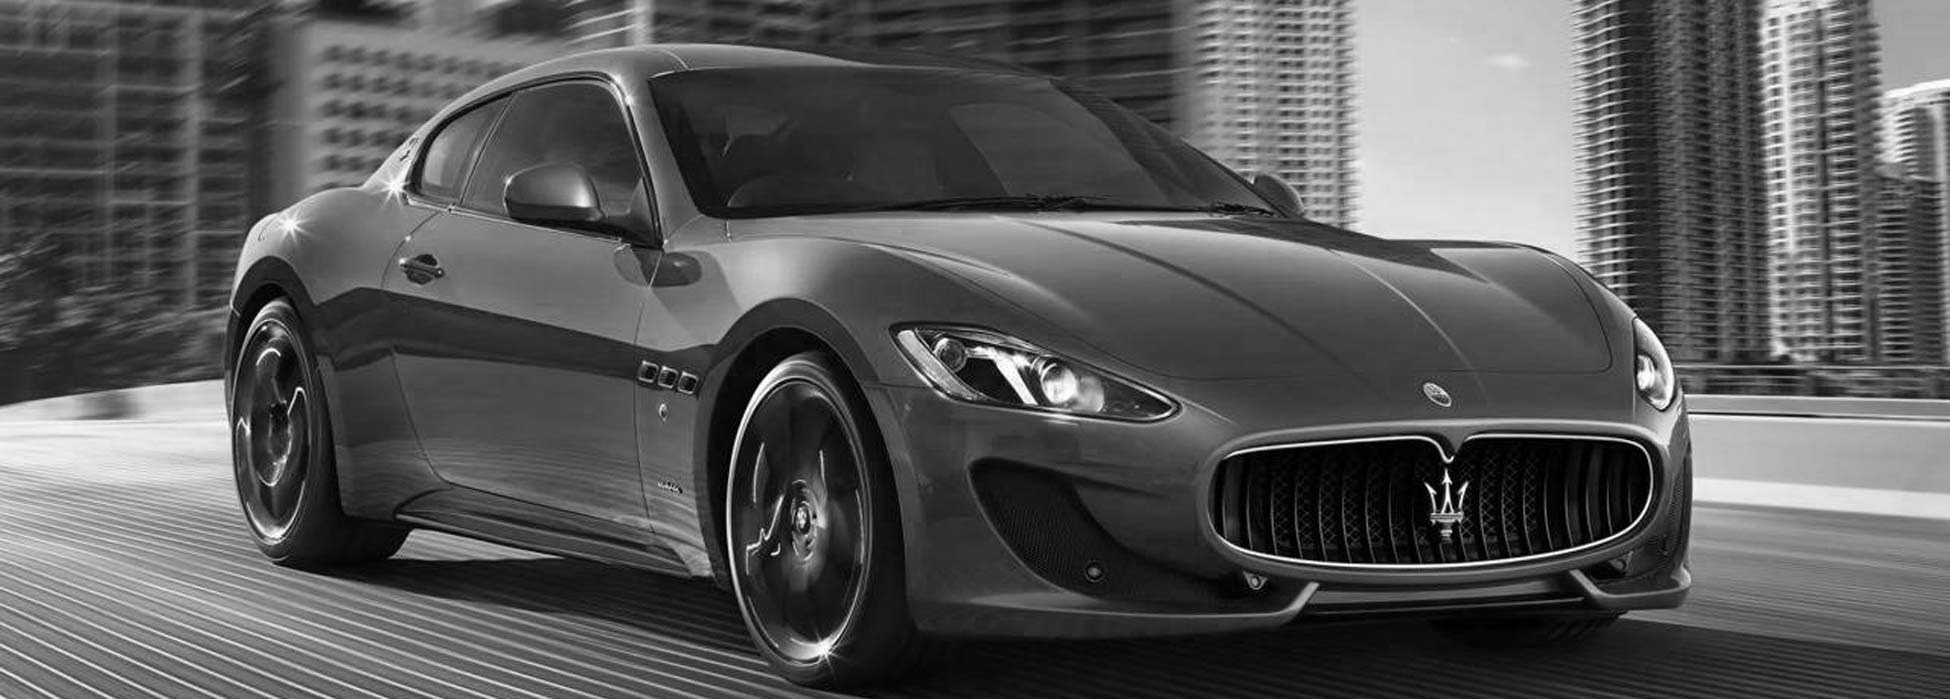 Maserati Ultimate Cars